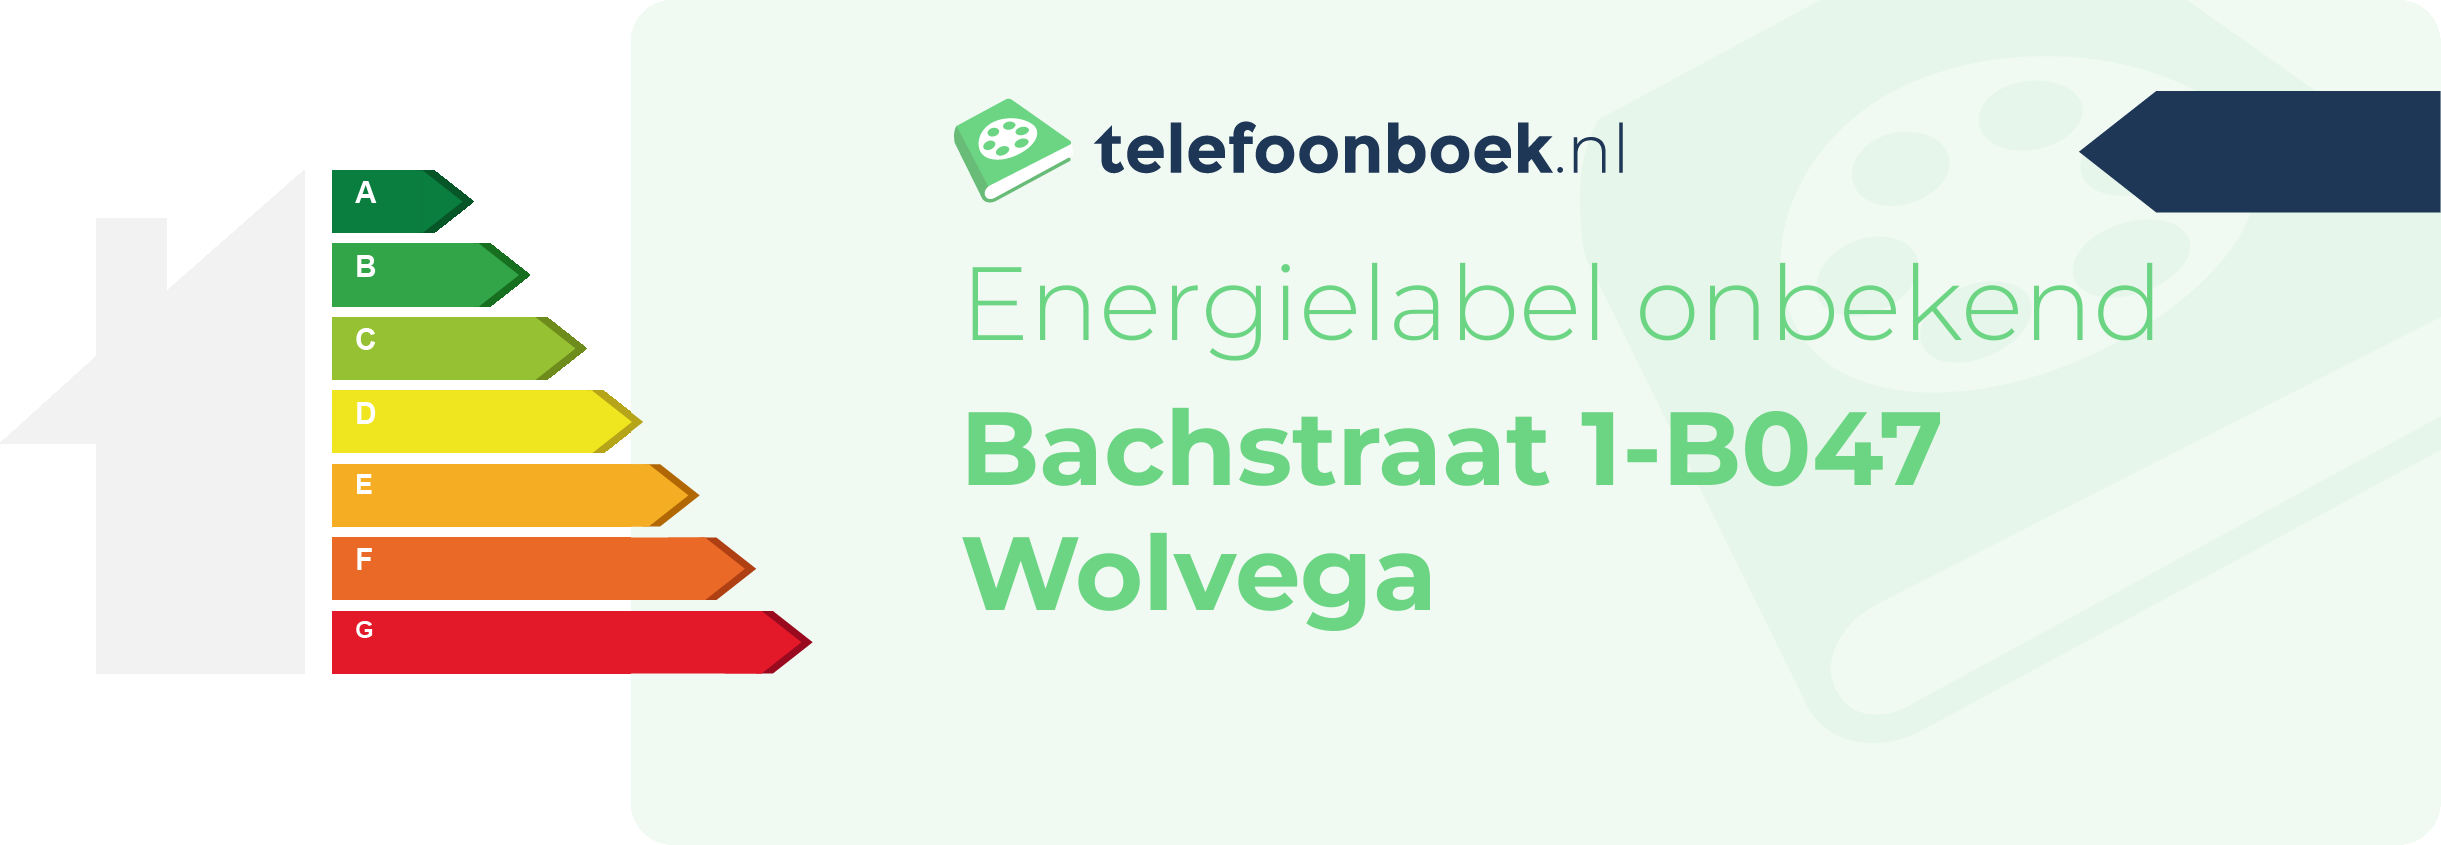 Energielabel Bachstraat 1-B047 Wolvega